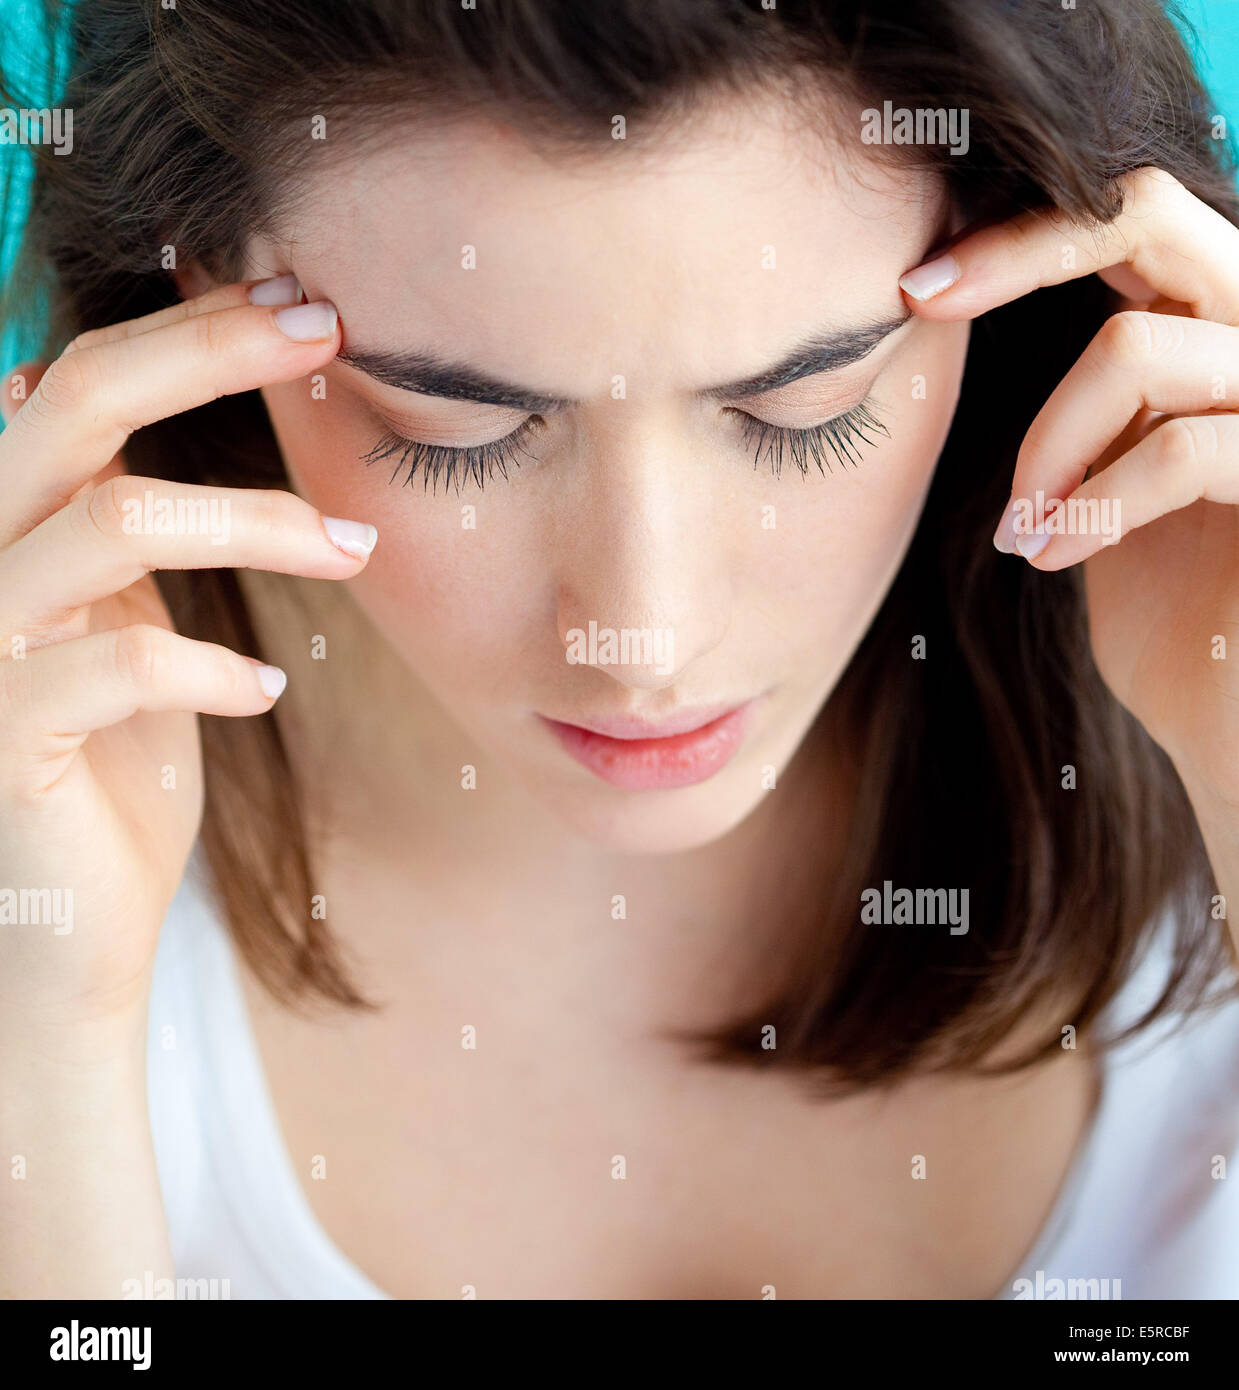 Woman suffering from headache. Stock Photo